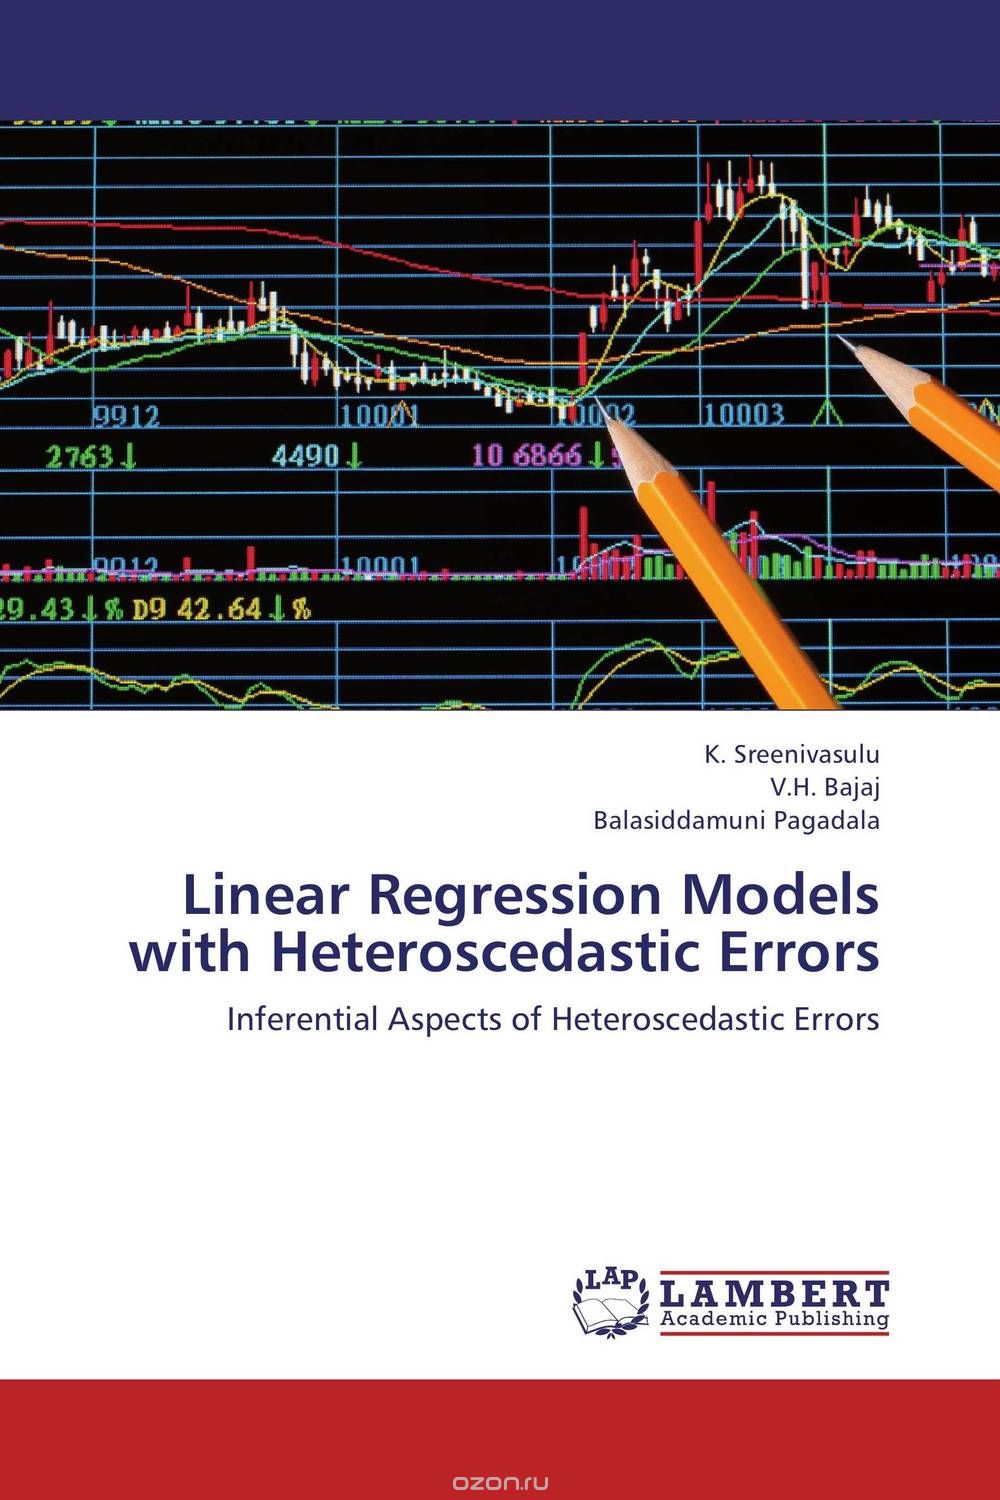 Скачать книгу "Linear Regression Models with Heteroscedastic Errors"